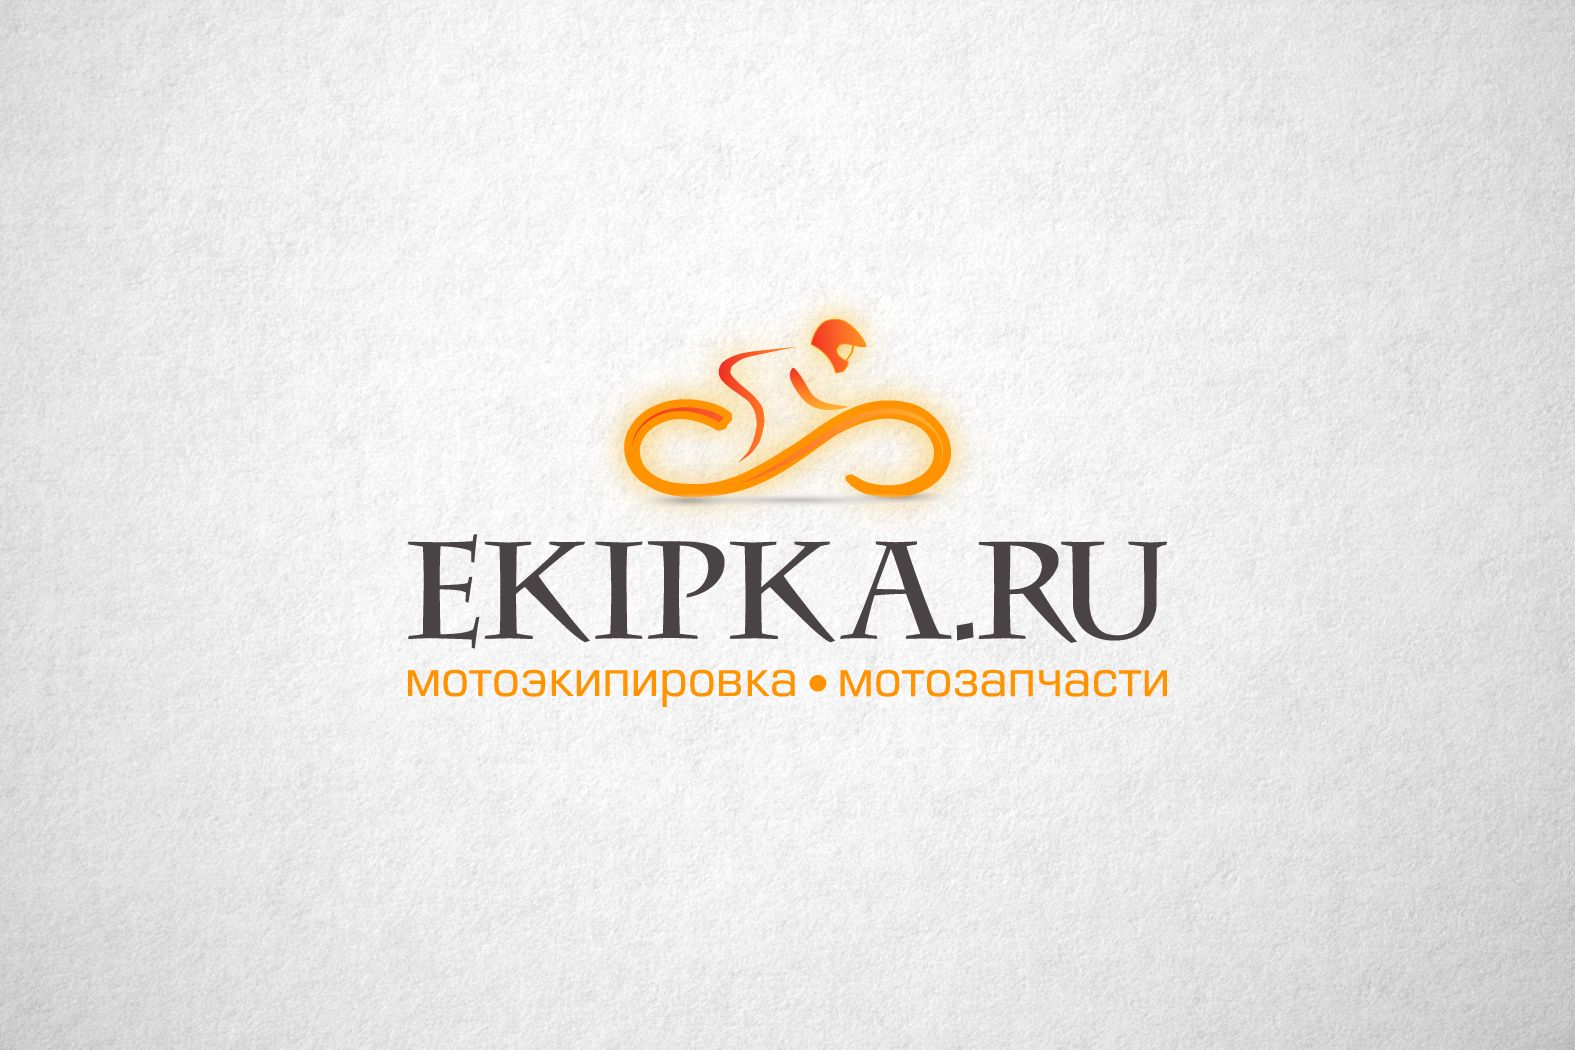 Лого для магазина мотоэкипировки ekipka.ru - дизайнер funkielevis